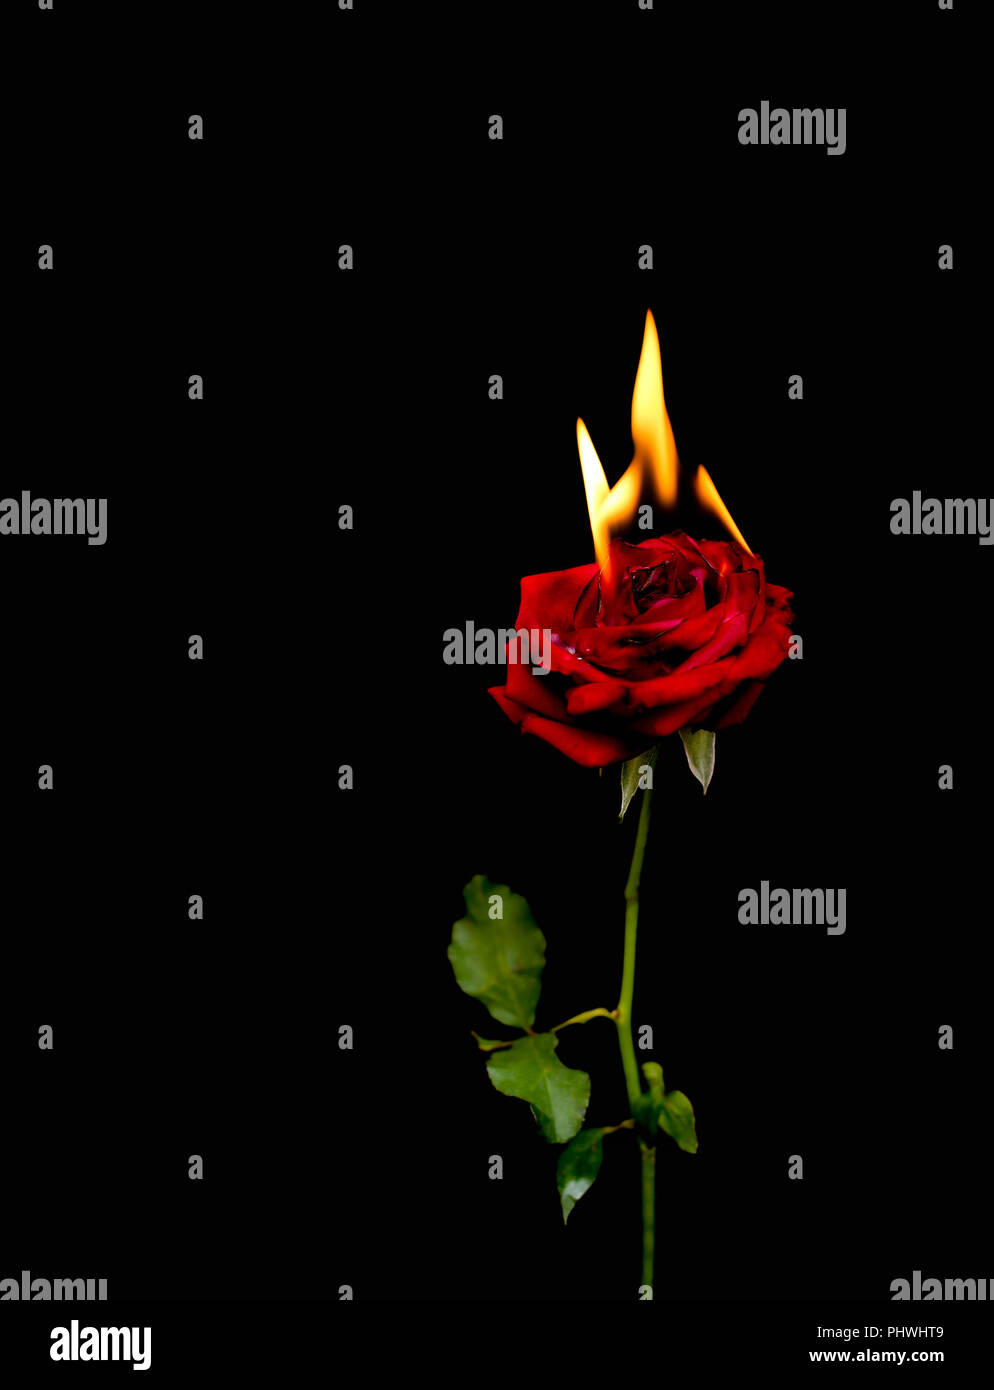 Burning Rose Immagini e Fotos Stock - Alamy